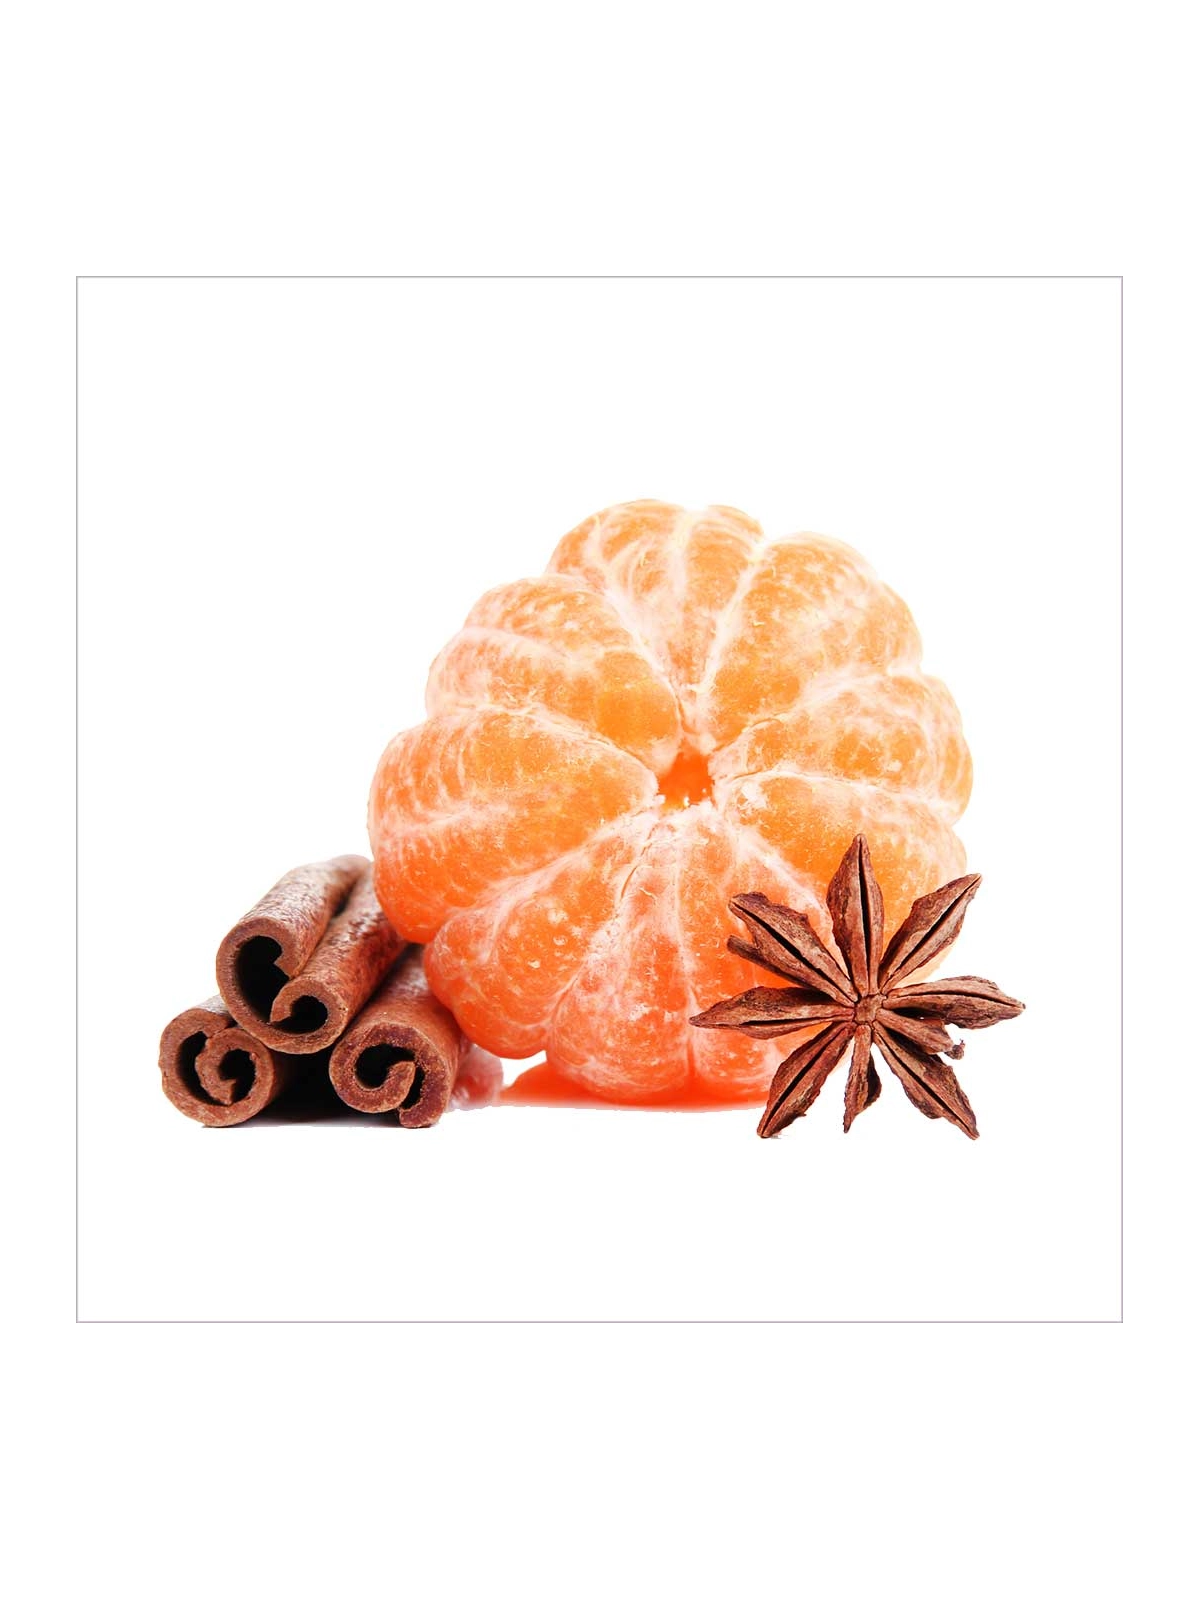 Mandarine Cannelle